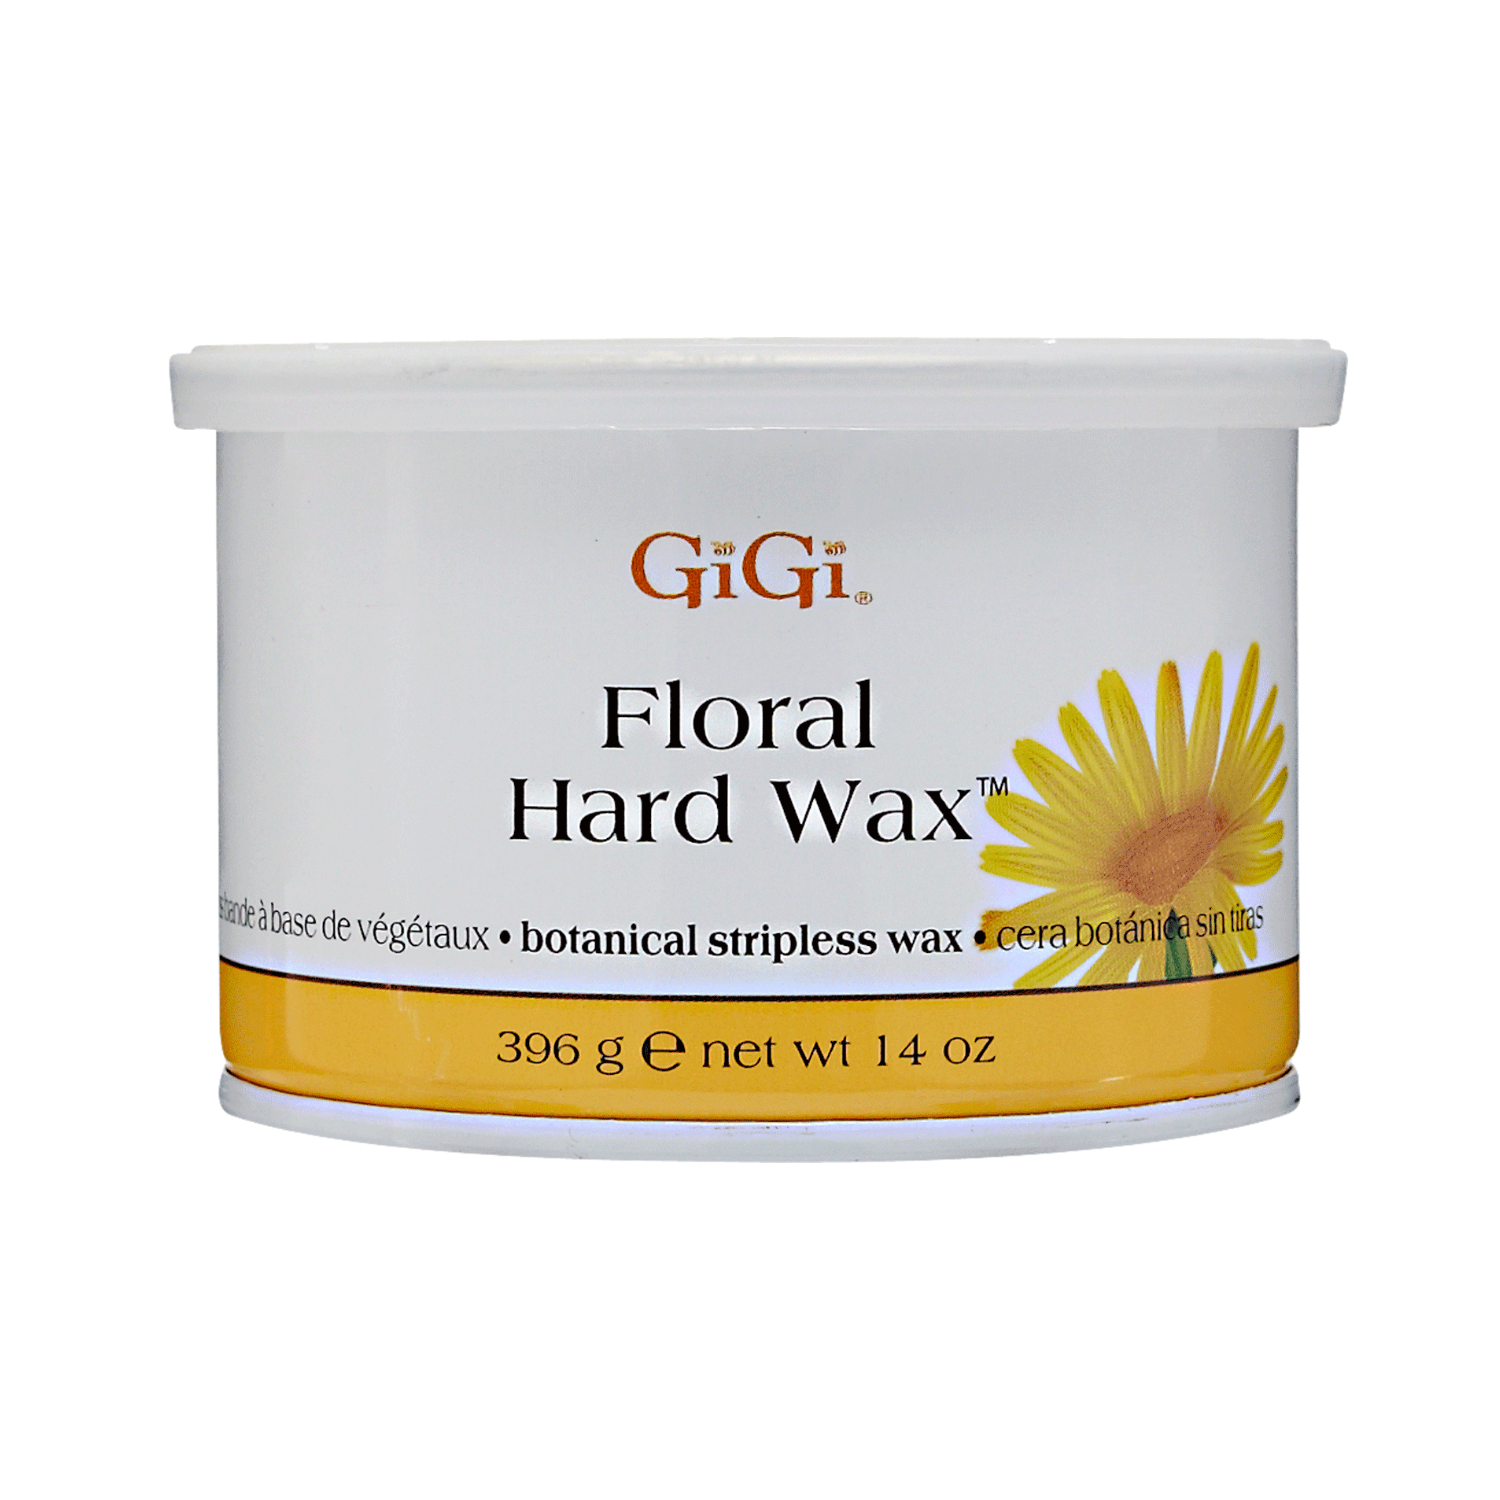 gigi wax warmer kit reviews